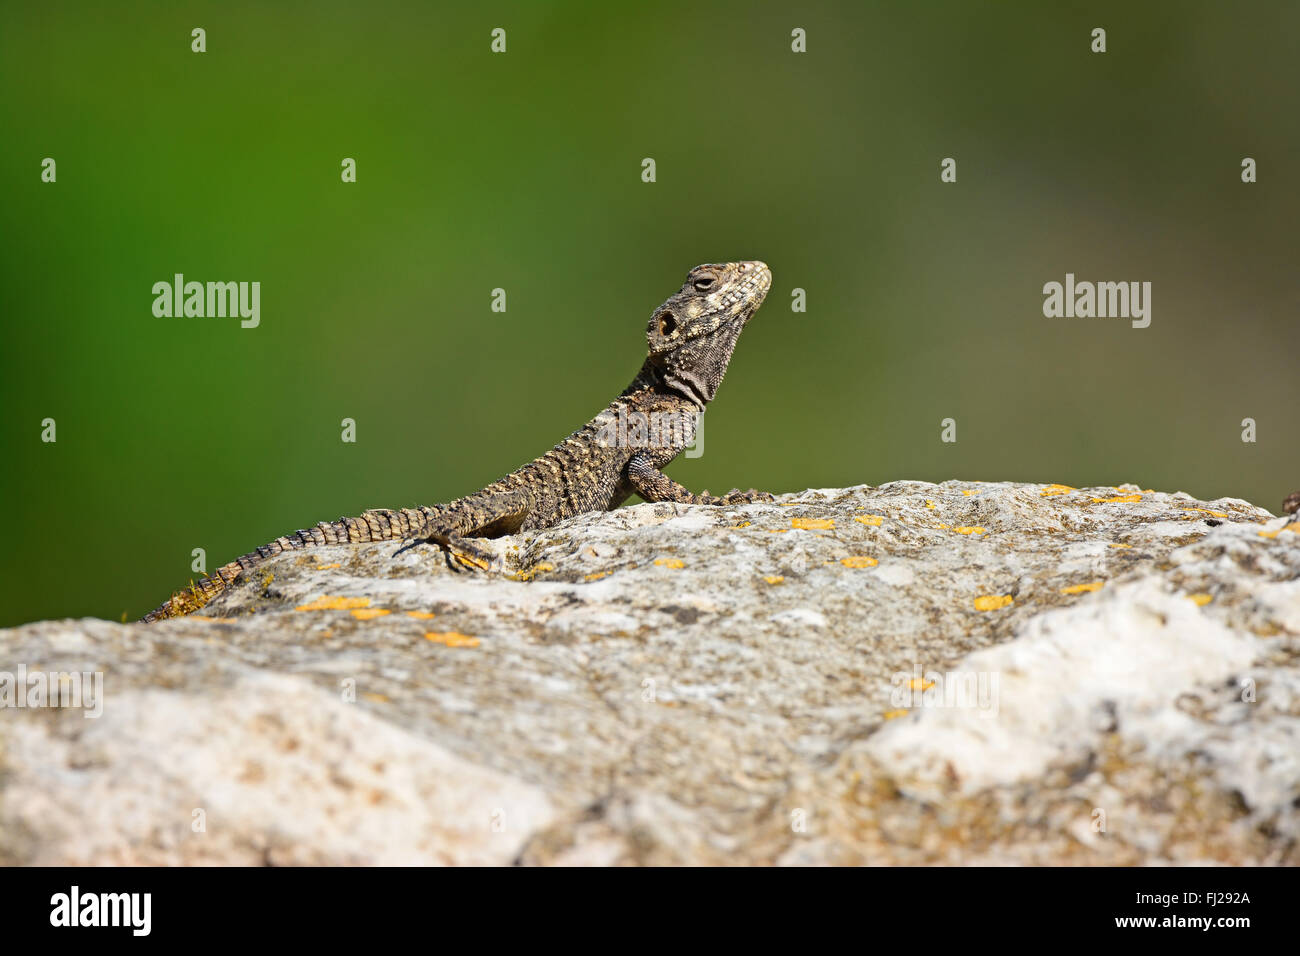 Agama lizard basking in the sun Stock Photo